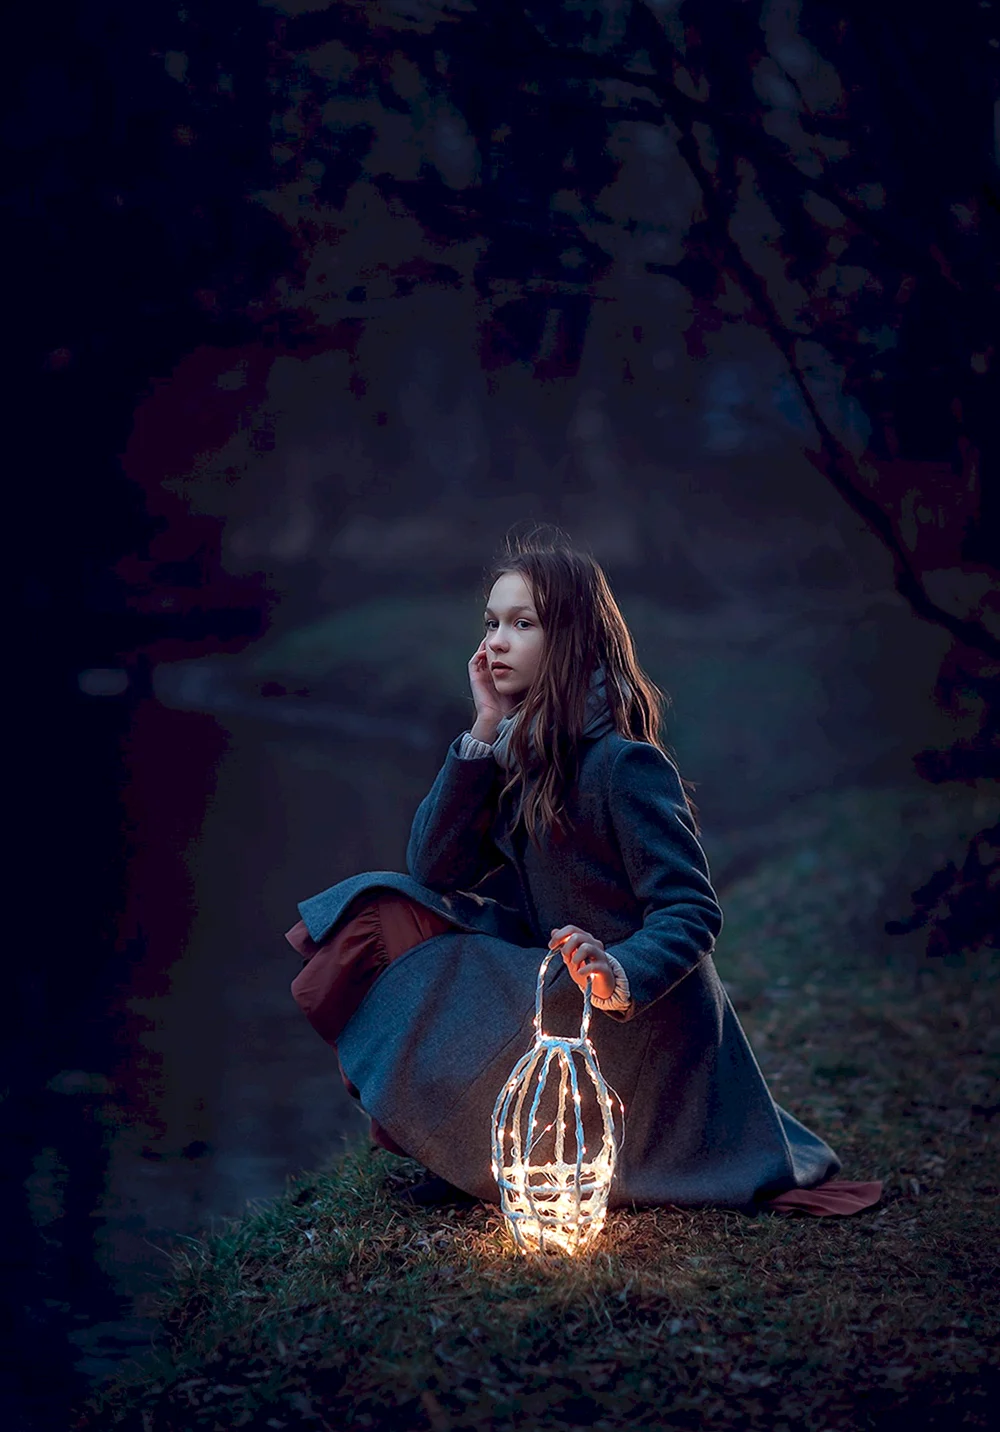 Girl with Lantern